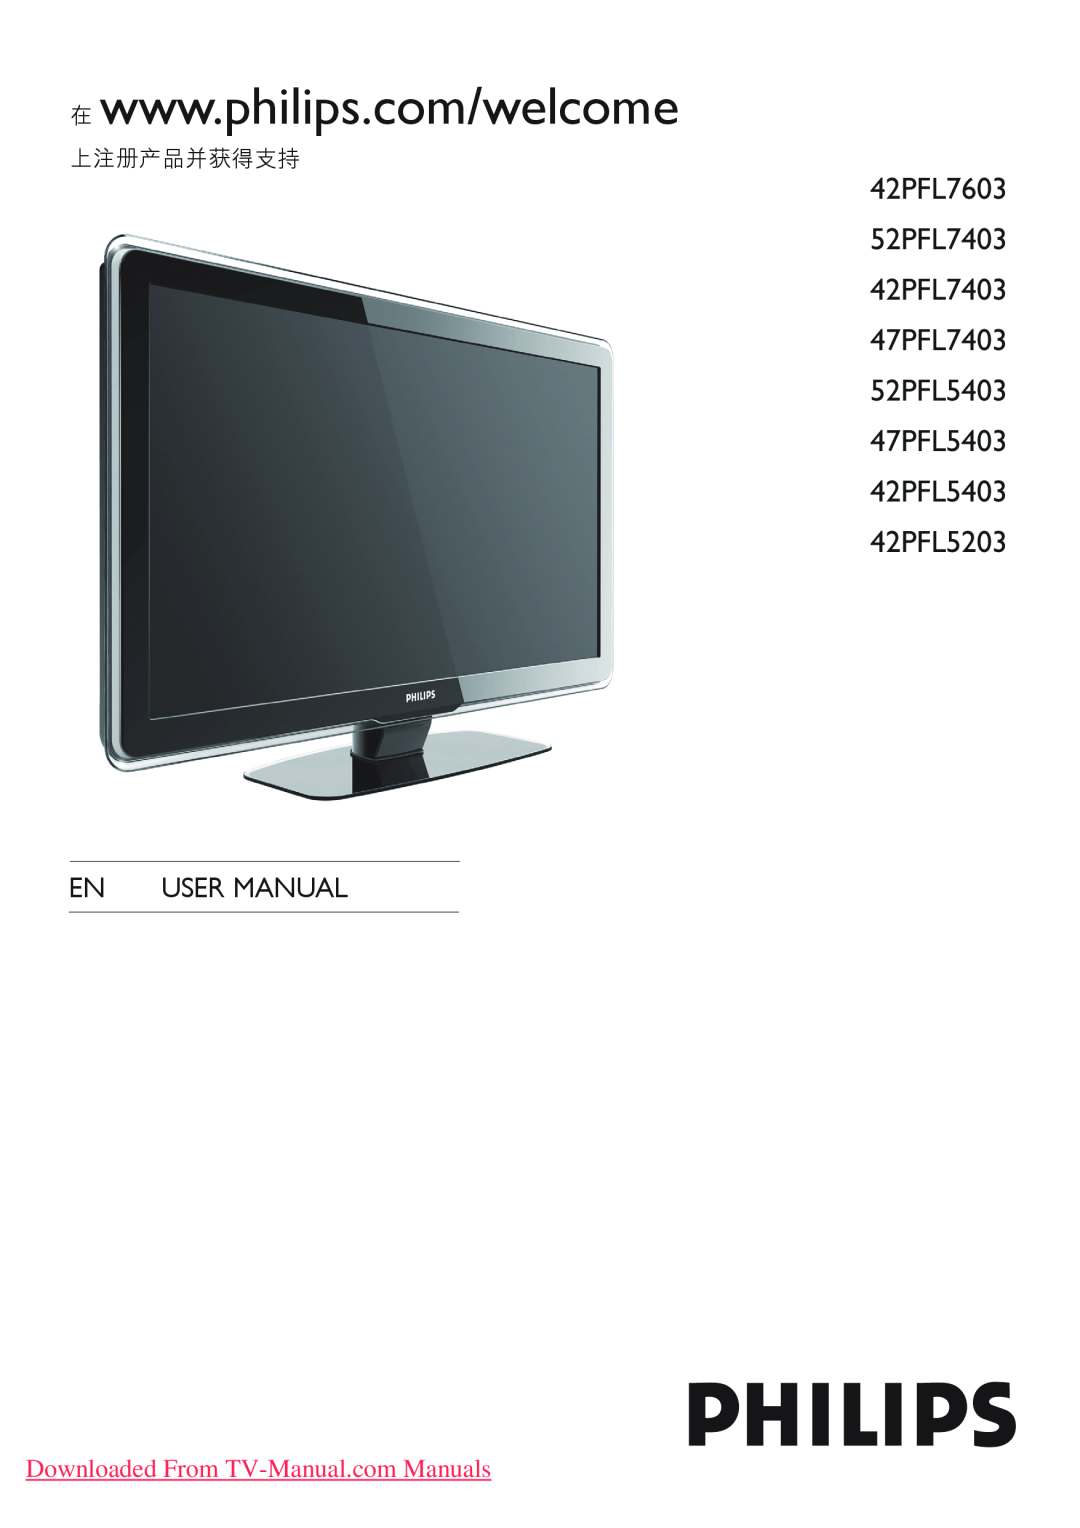 Philips user manual Downloaded From TV-Manual.comManuals, 42PFL7603 52PFL7403 42PFL7403 47PFL7403 52PFL5403, 上注册产品并获得支持 